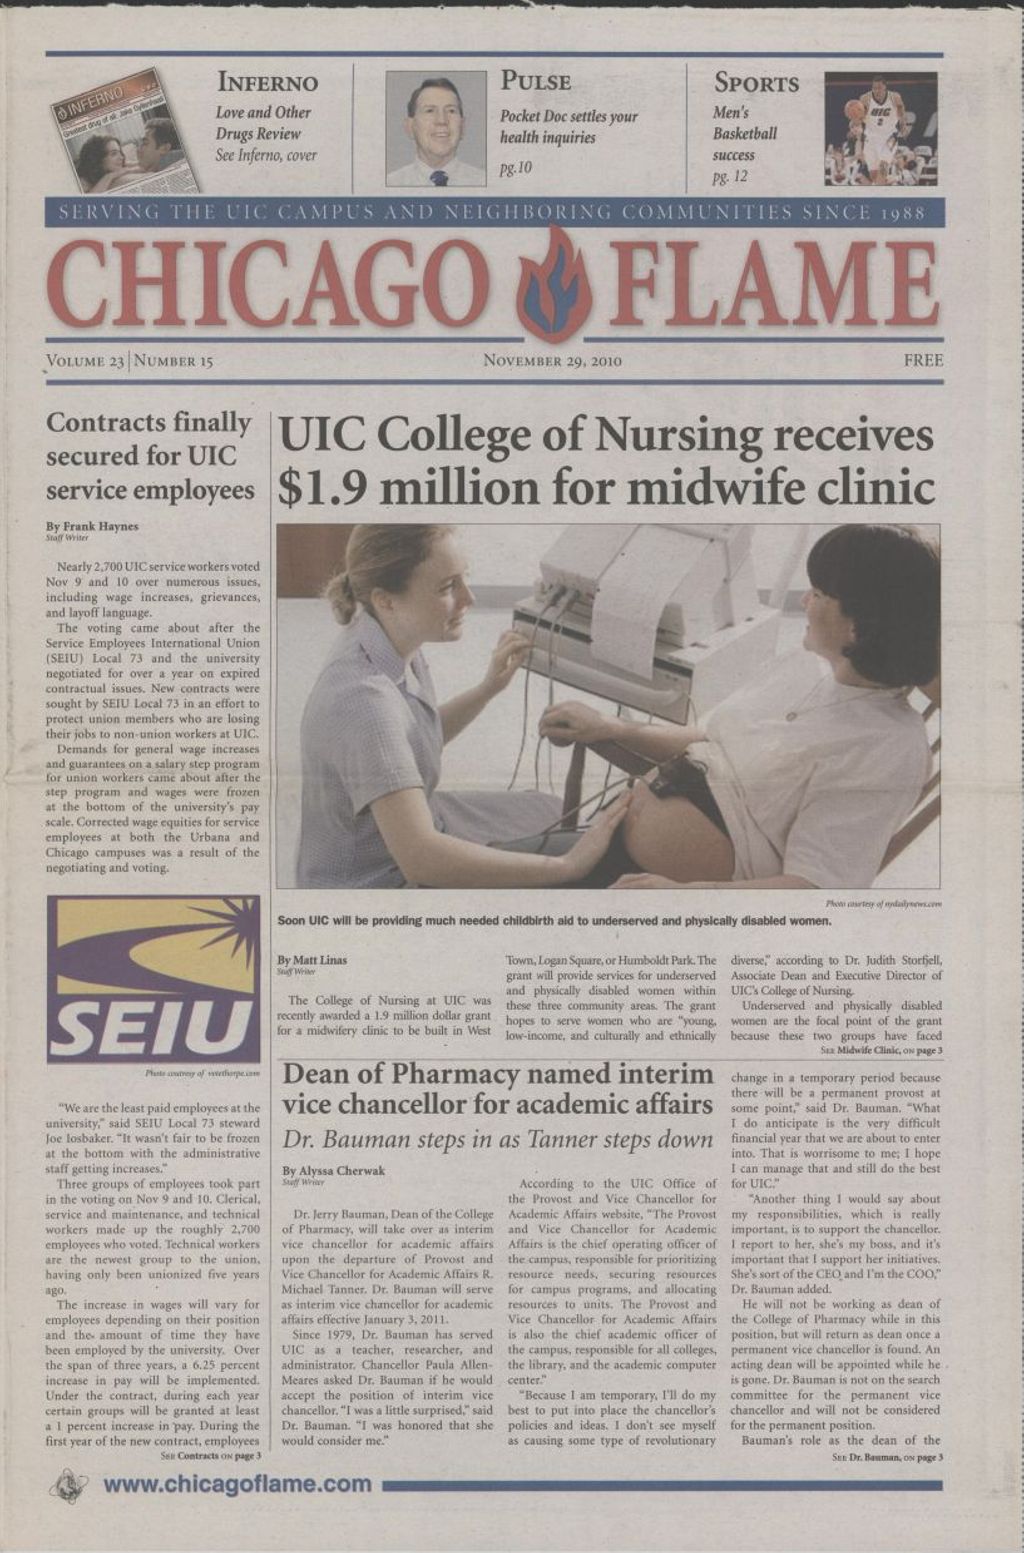 Miniature of Chicago Flame (November 29, 2010)